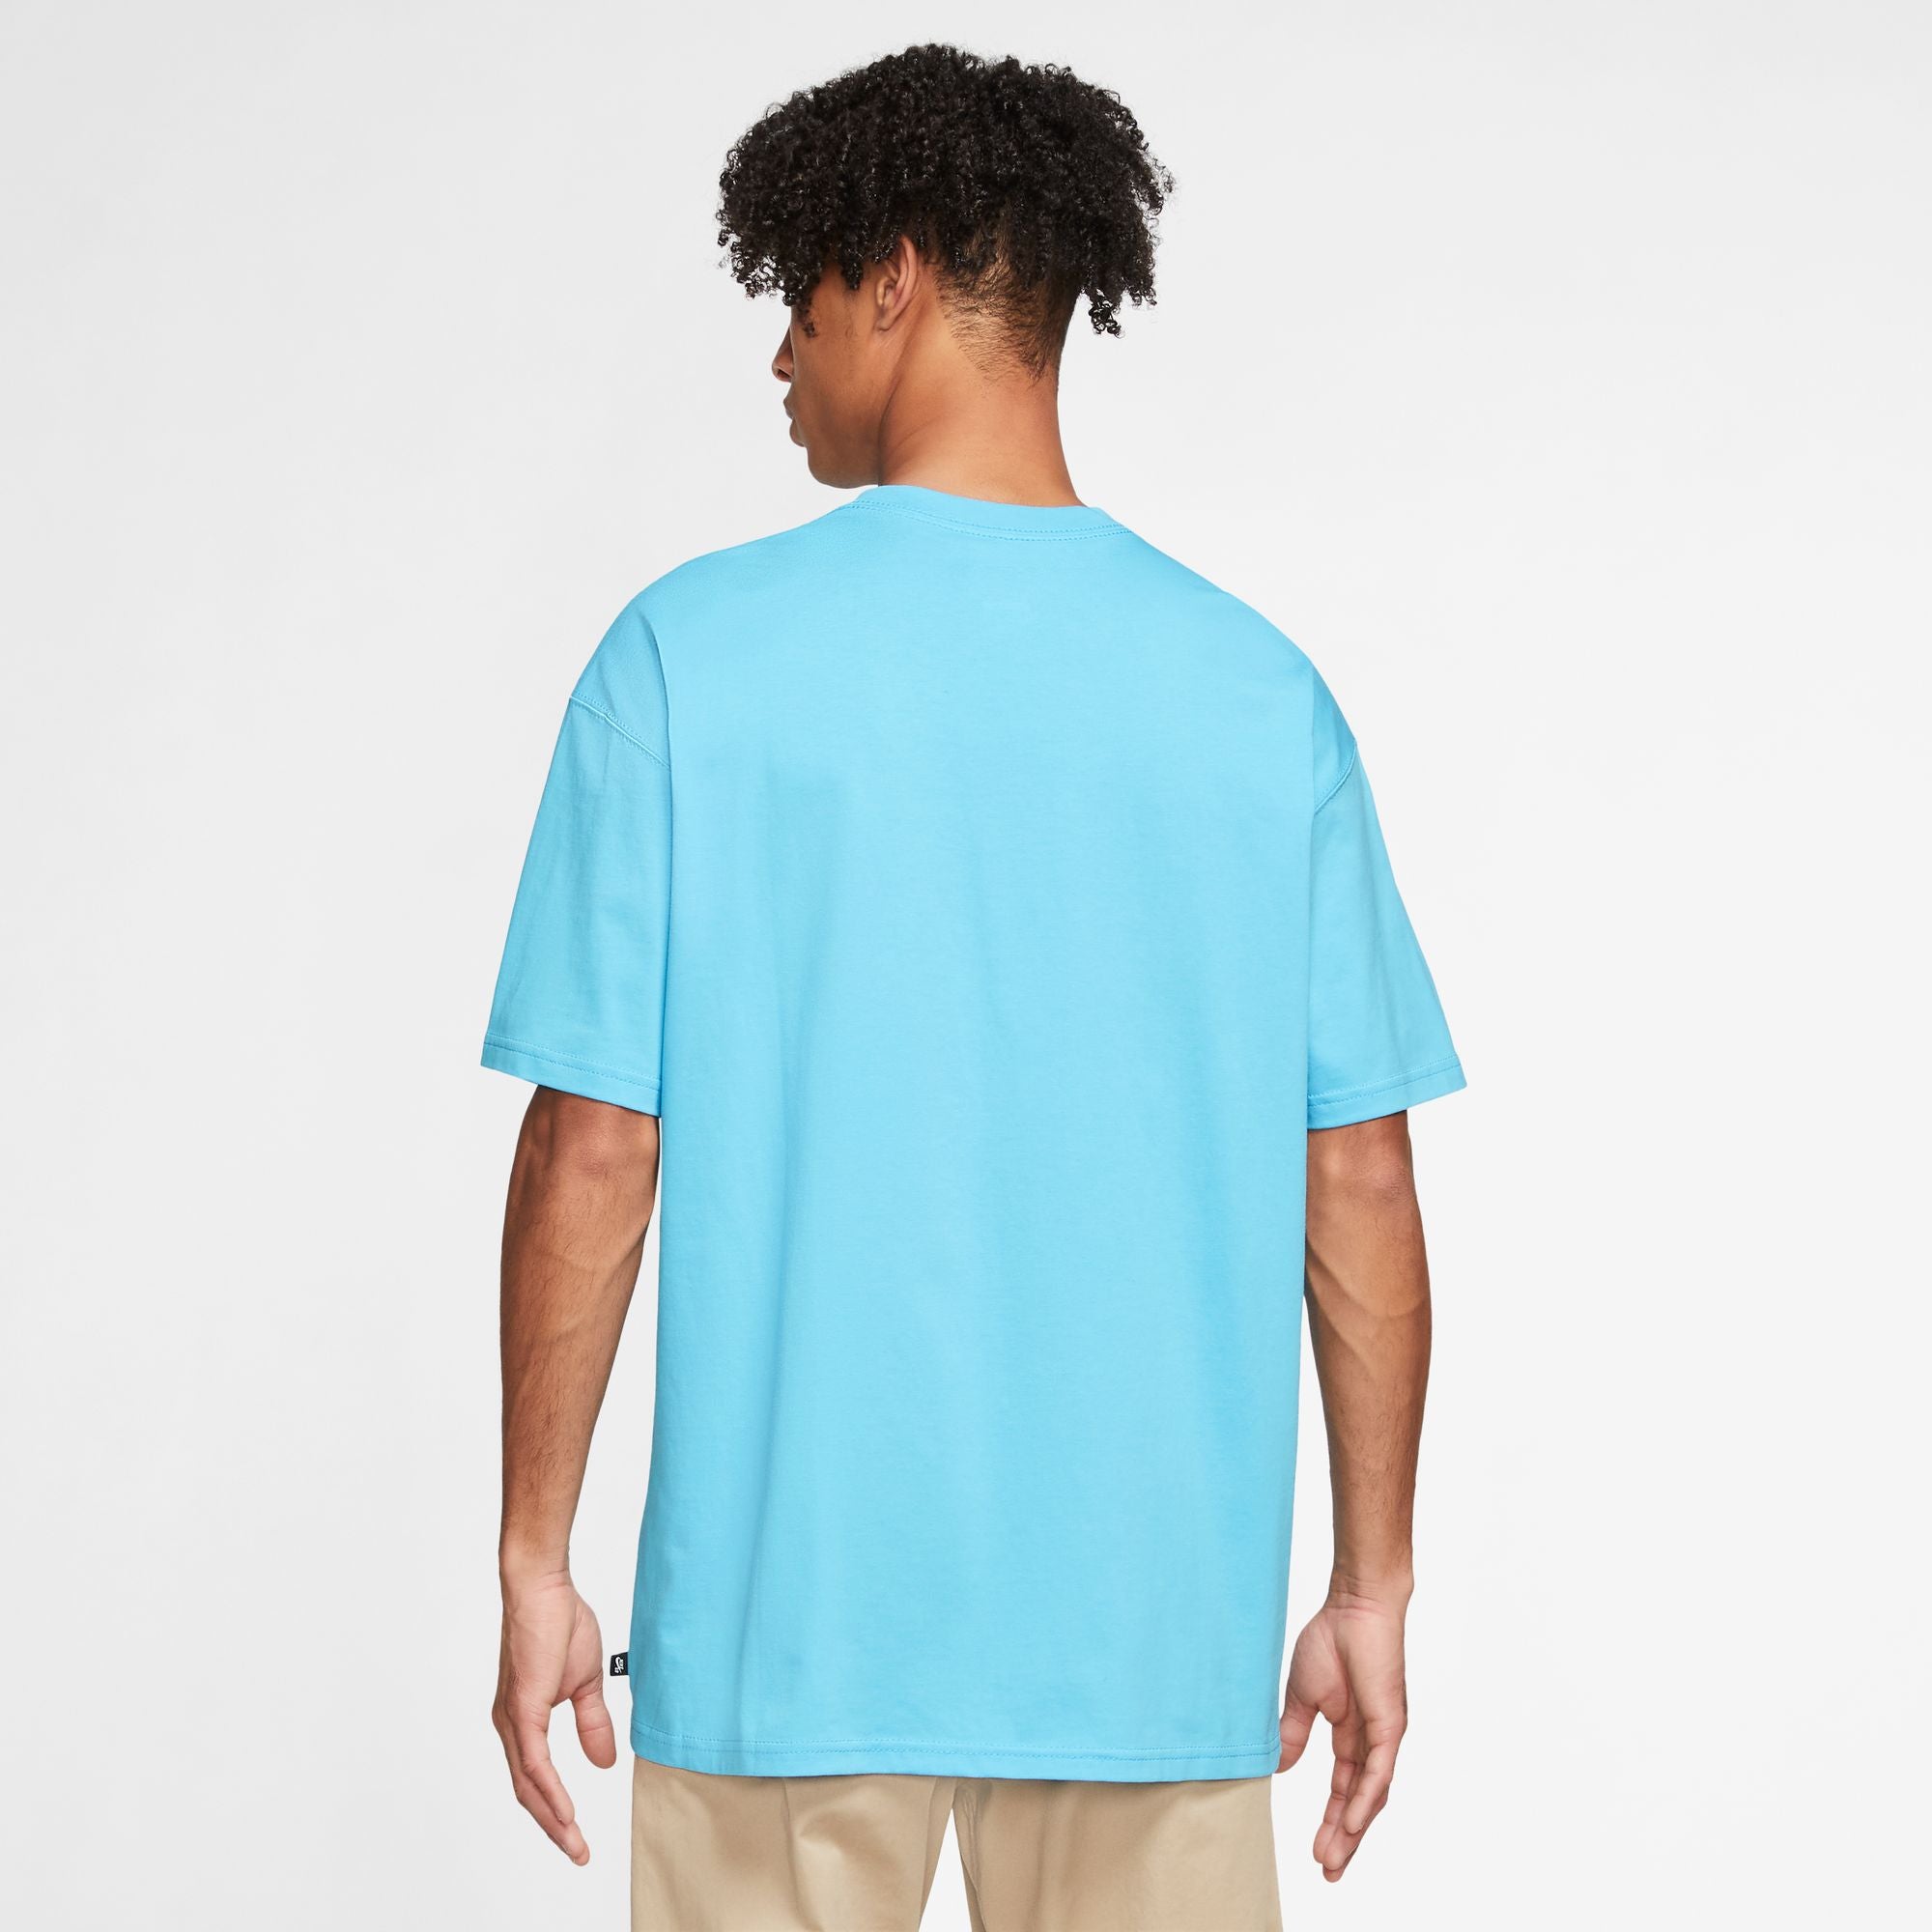 Nike SB Dunkteam T-shirt - Baltic Blue